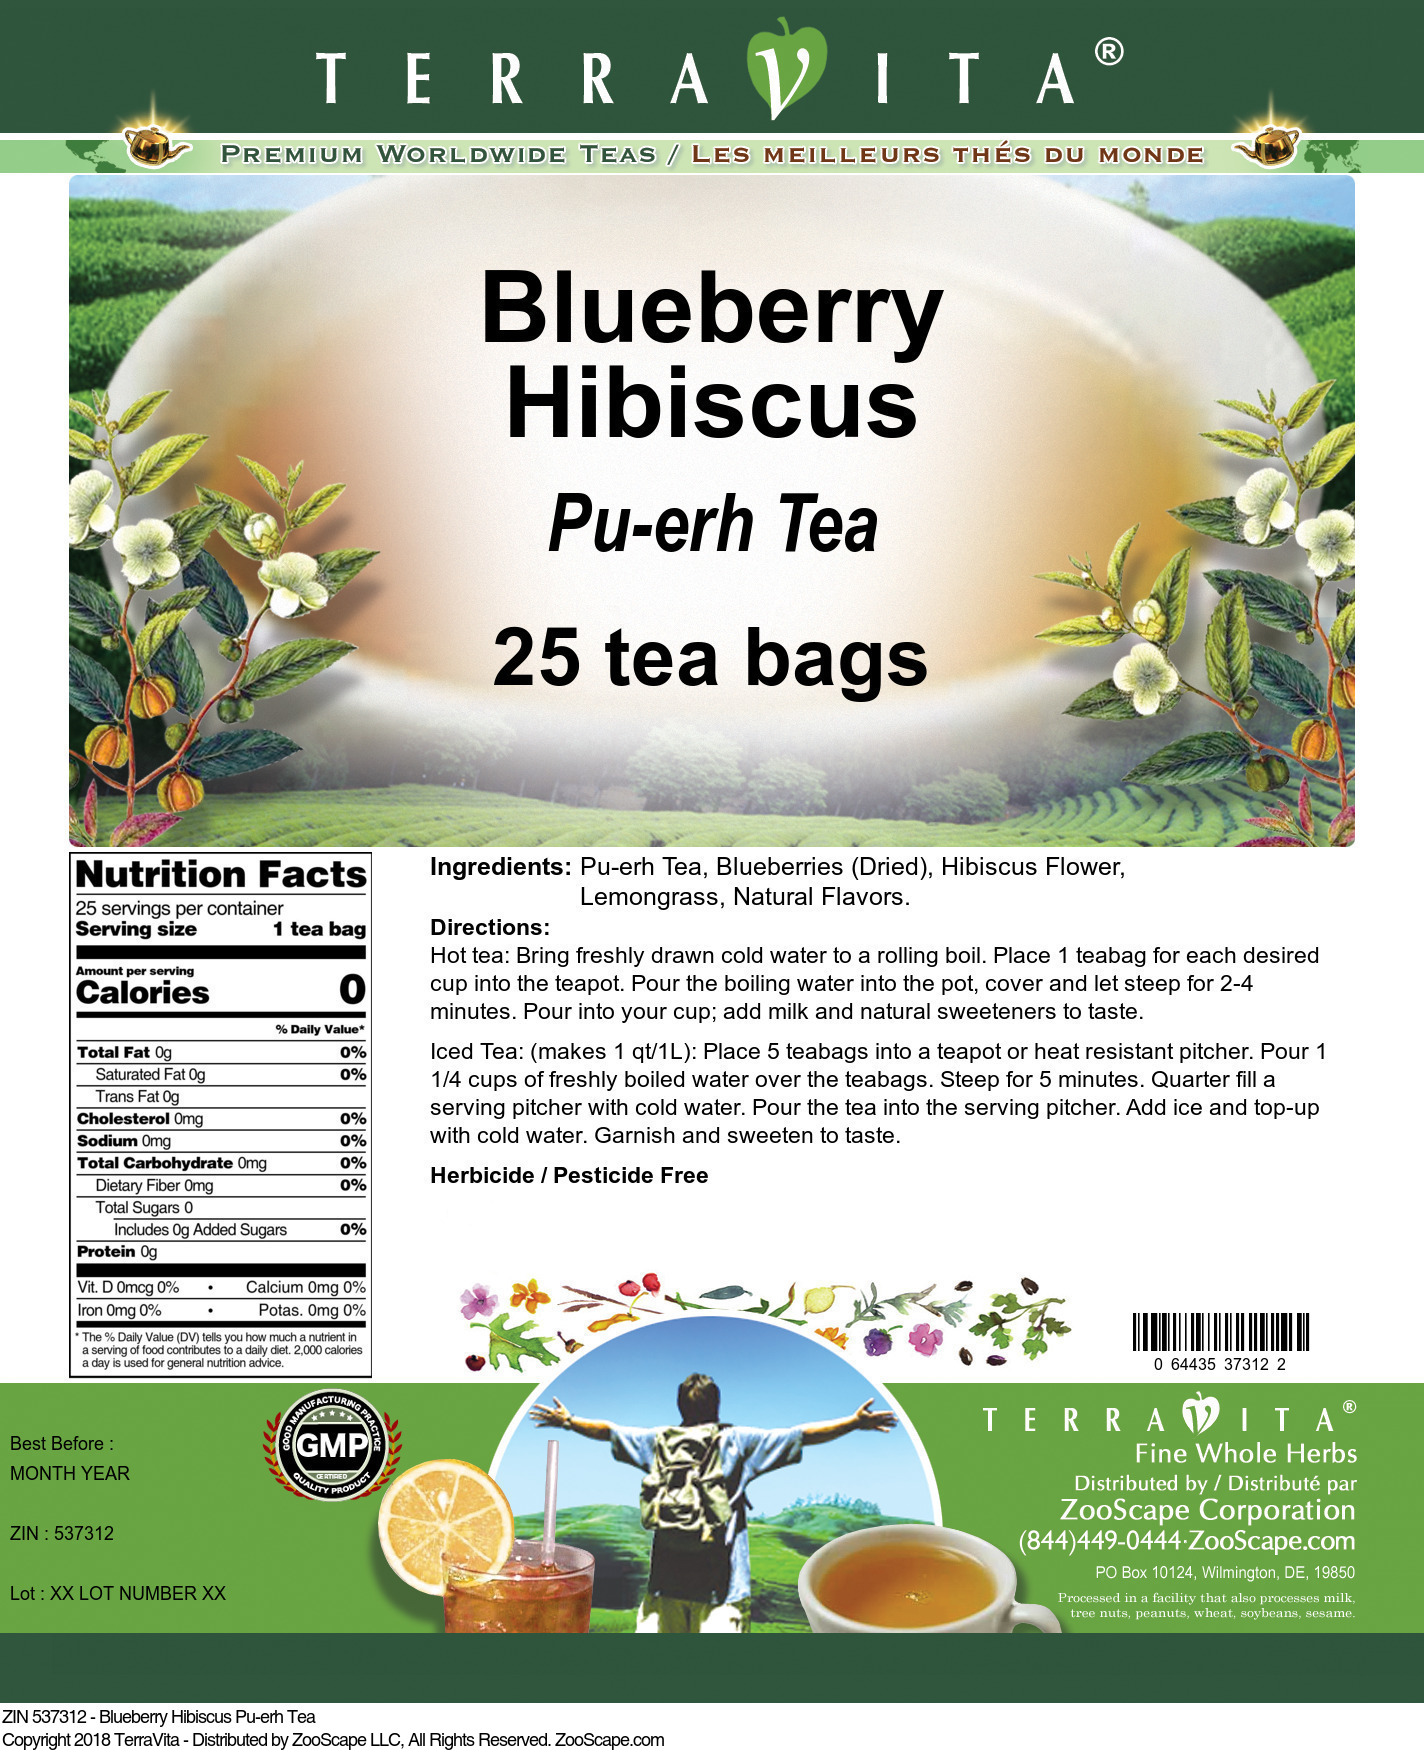 Blueberry Hibiscus Pu-erh Tea - Label